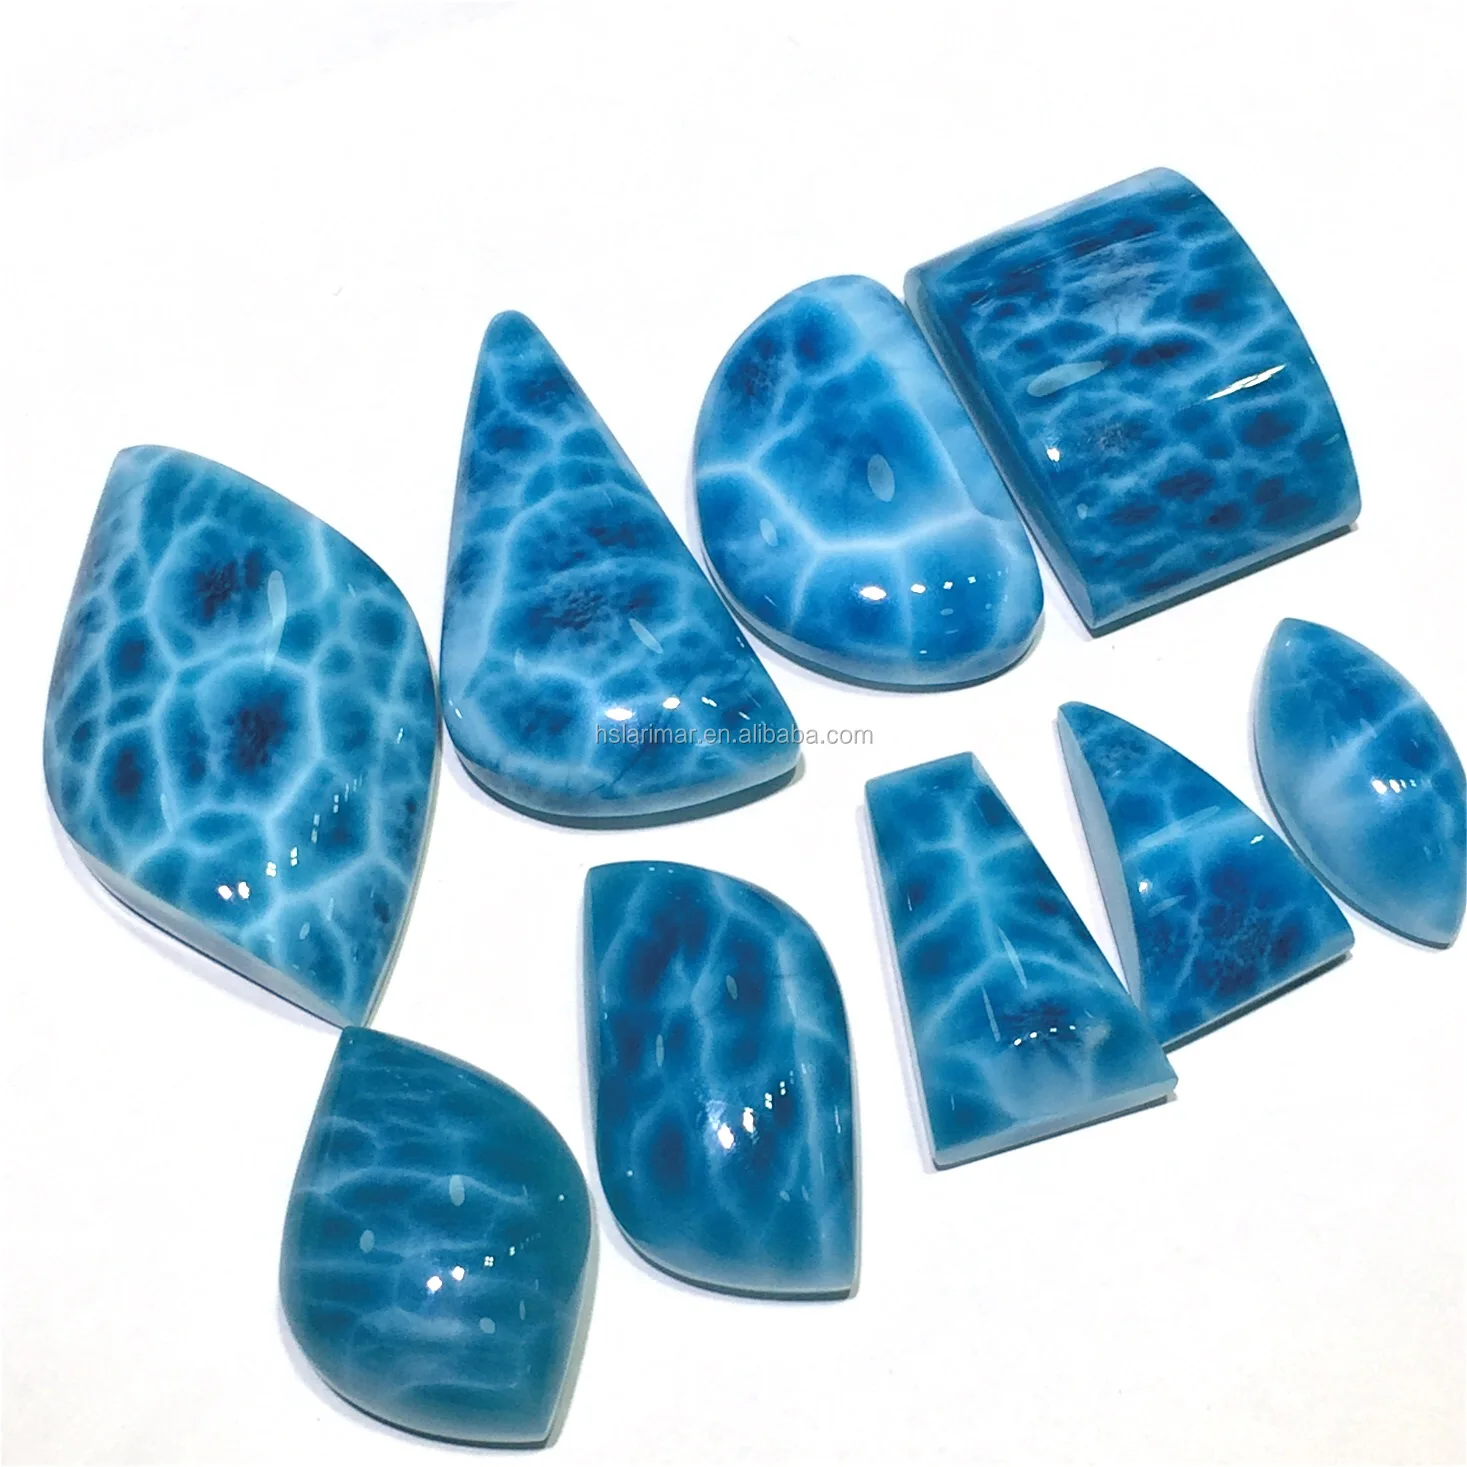 Excellent Quality Blue Larimar Cabochon Loose gemstone 81.30 Cts Pear Shape Best For Pendant Larimar Gemstone